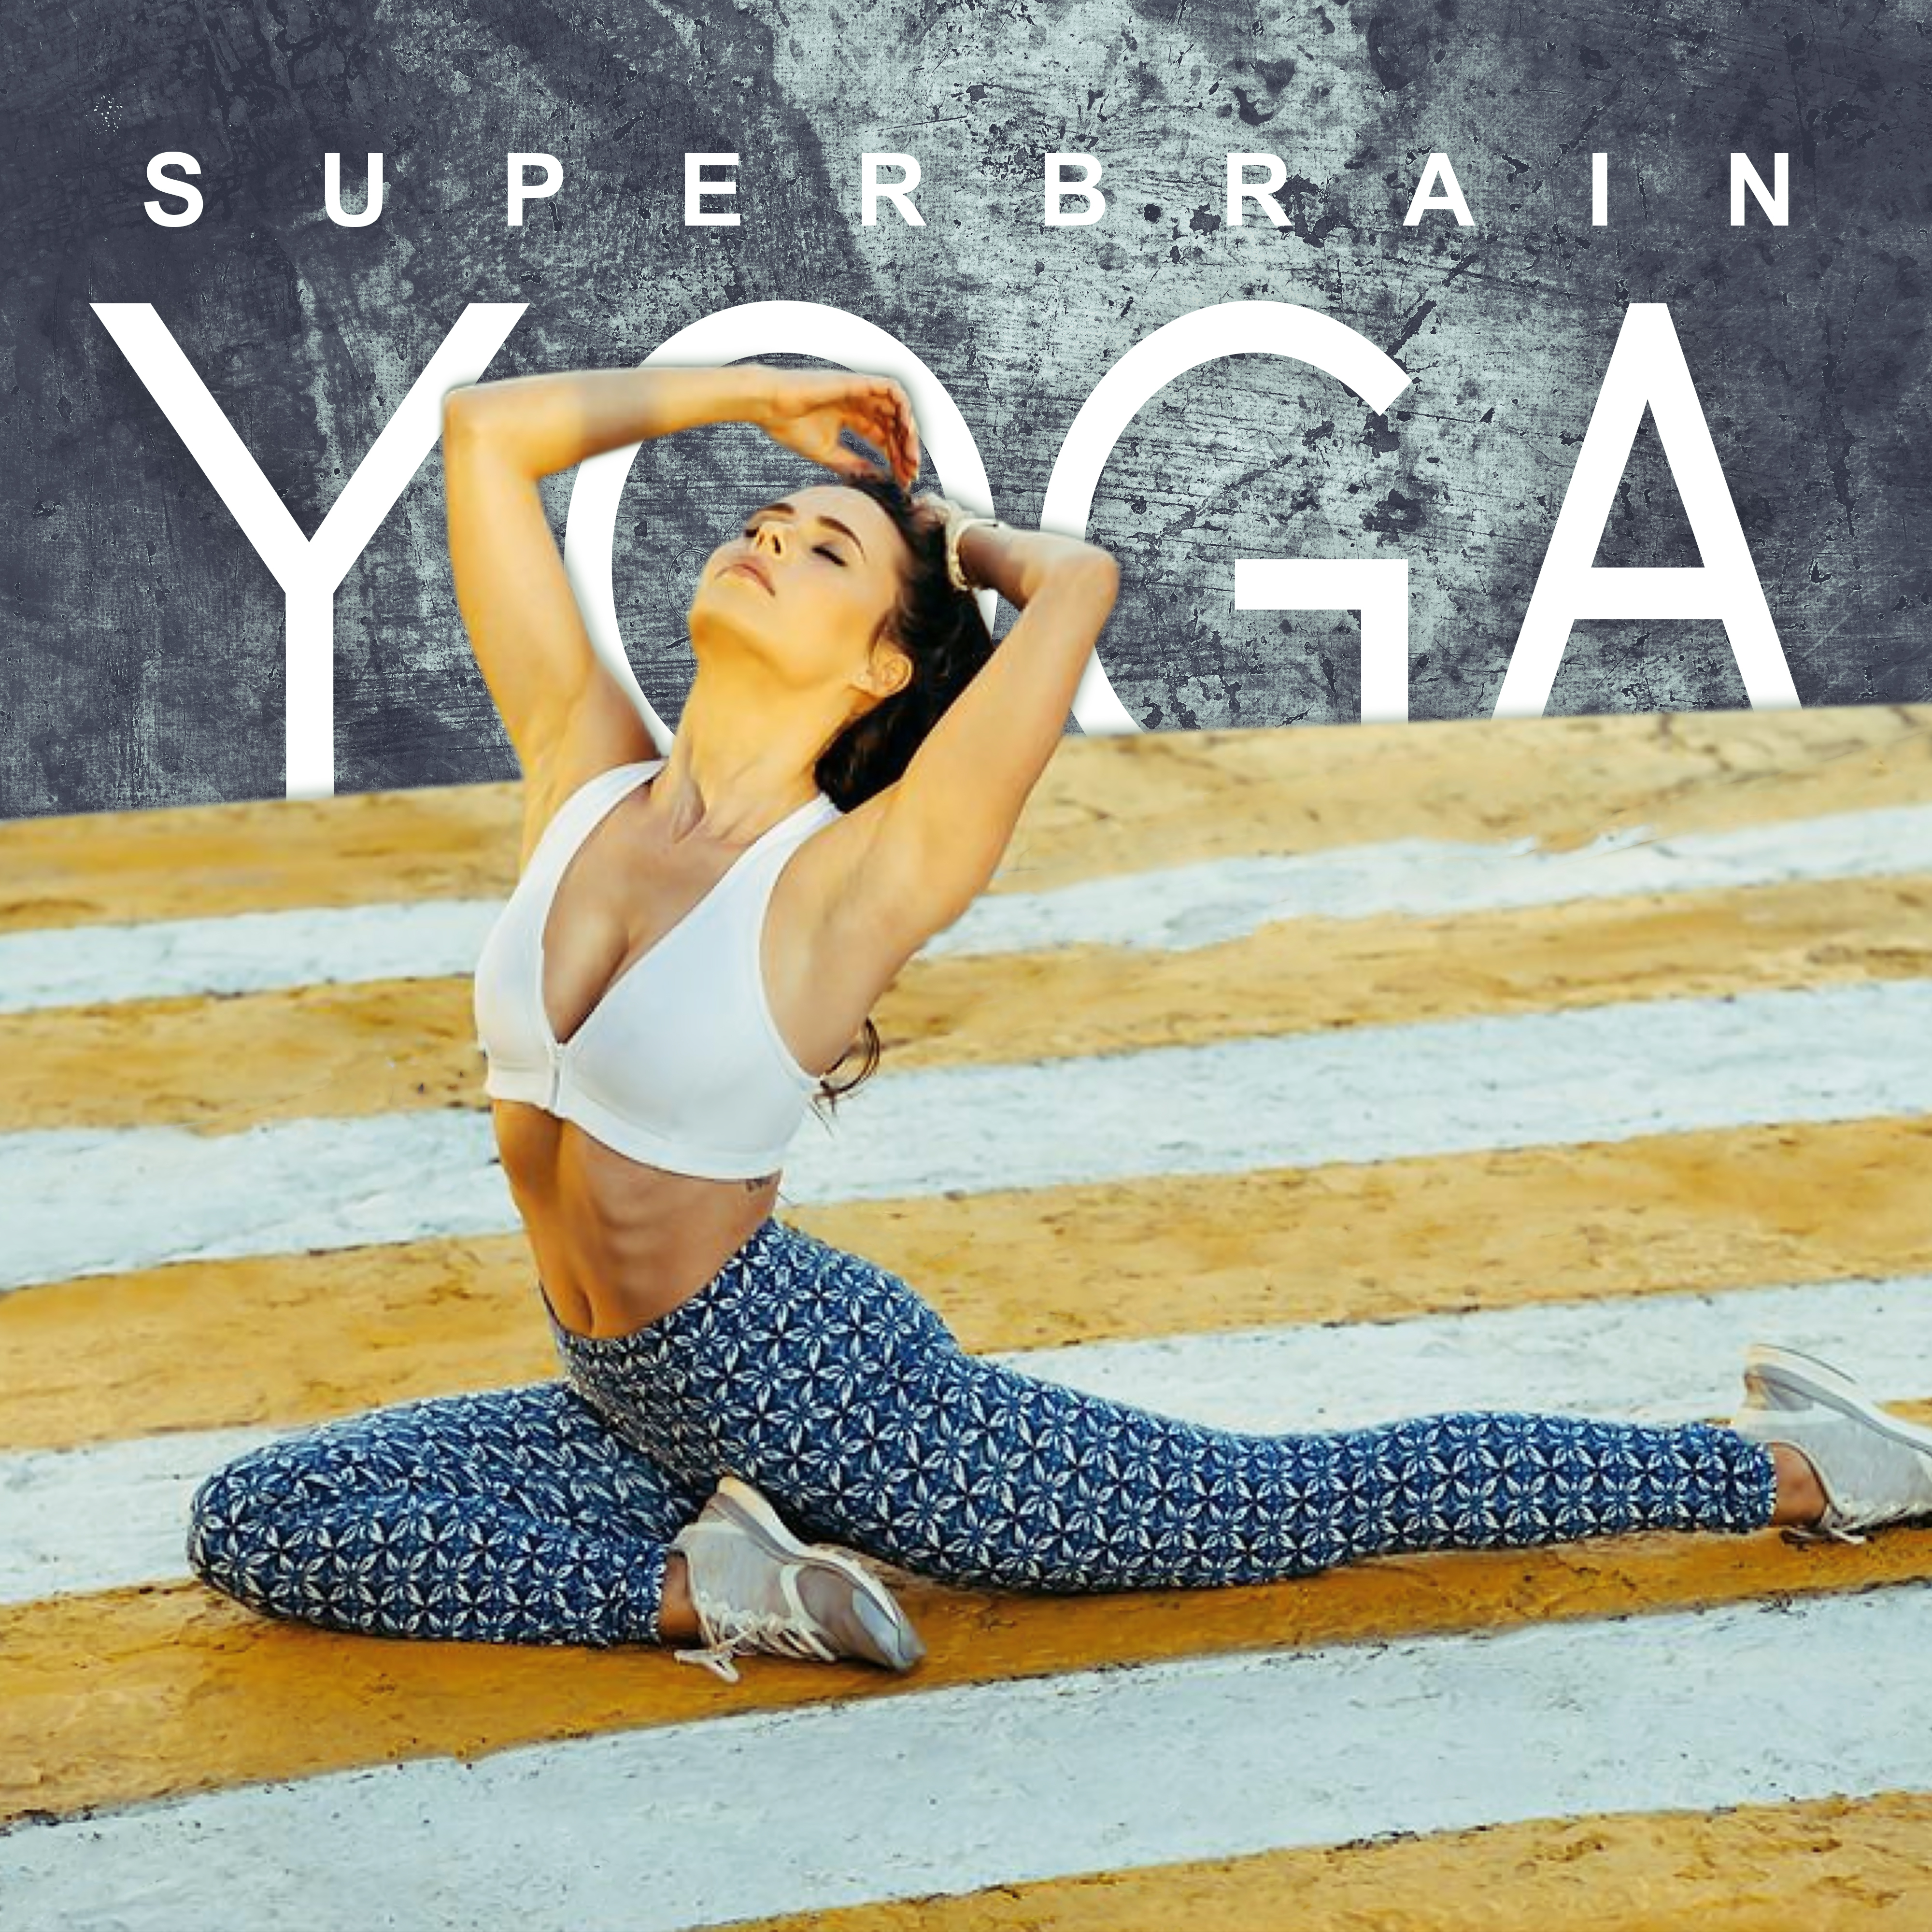 Superbrain Yoga